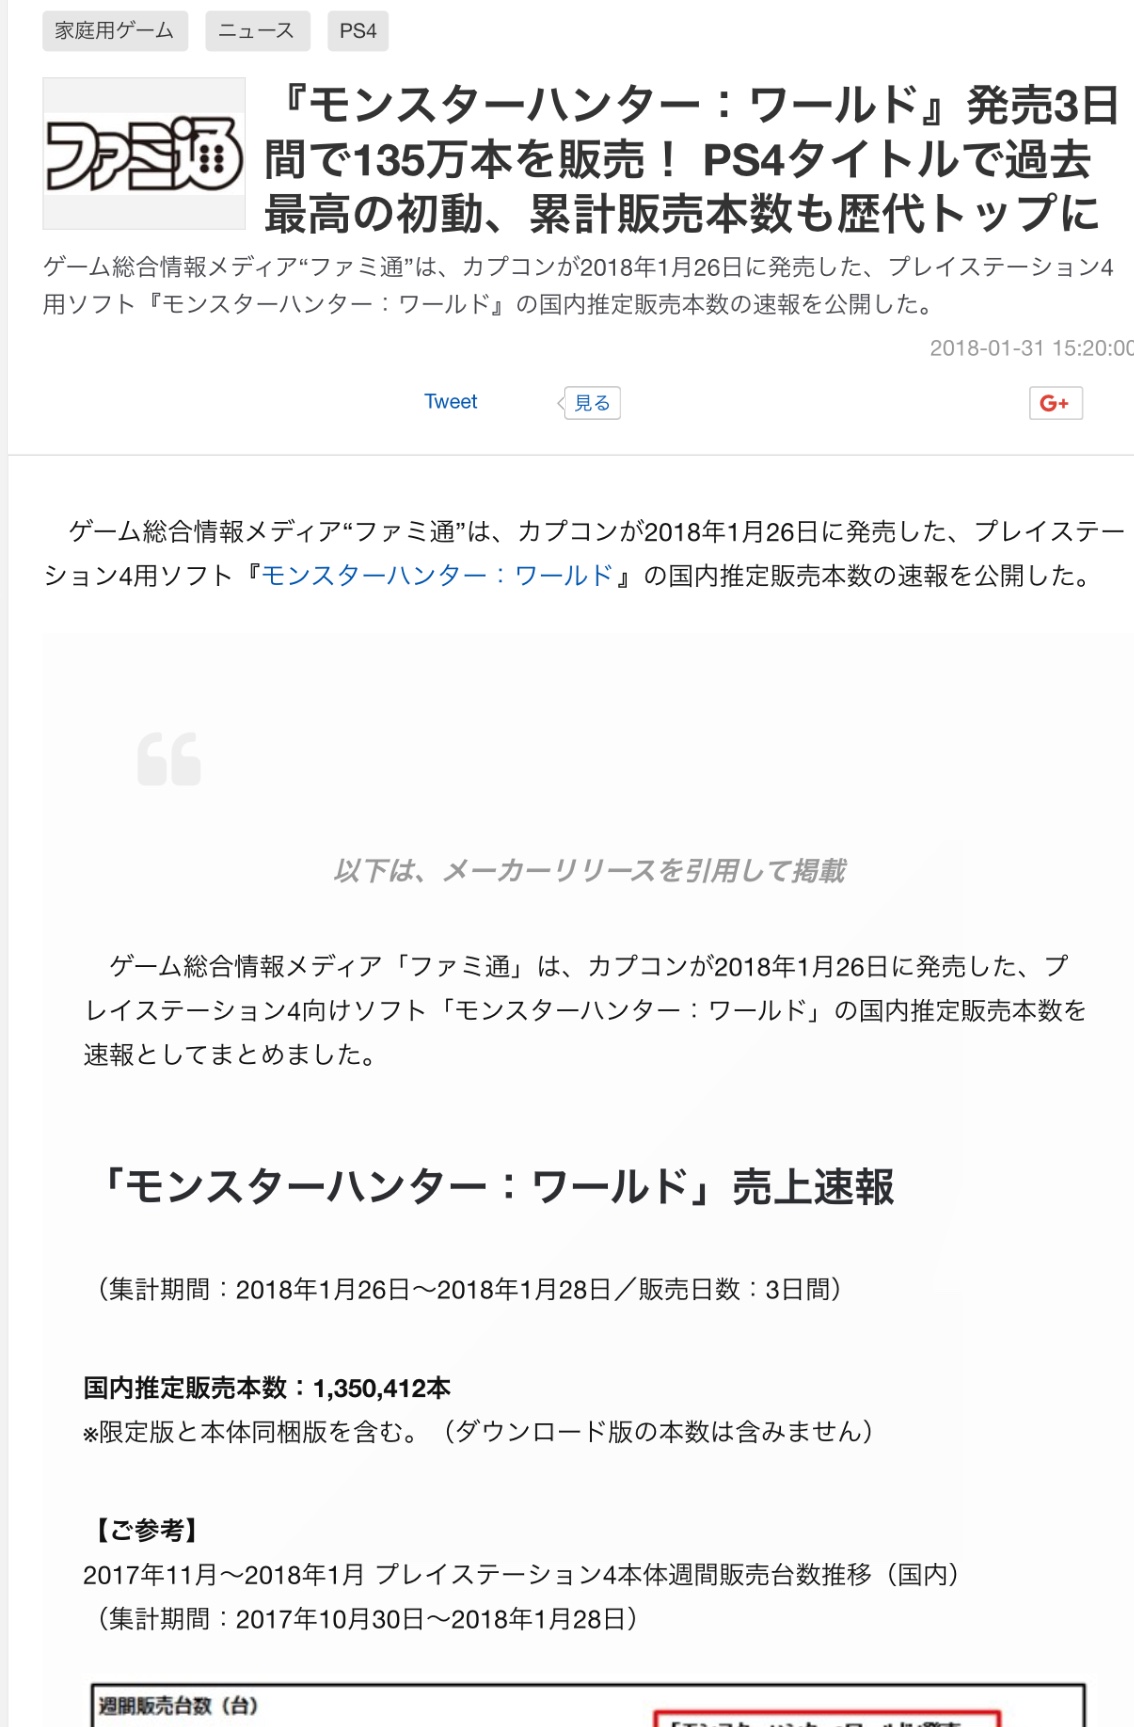 Fami通 Mhw日本3日销量135万份 包括实体限定版和普通版不包含数字版 创造日本ps4软件最高初始销量历代累计销量top Nga玩家社区